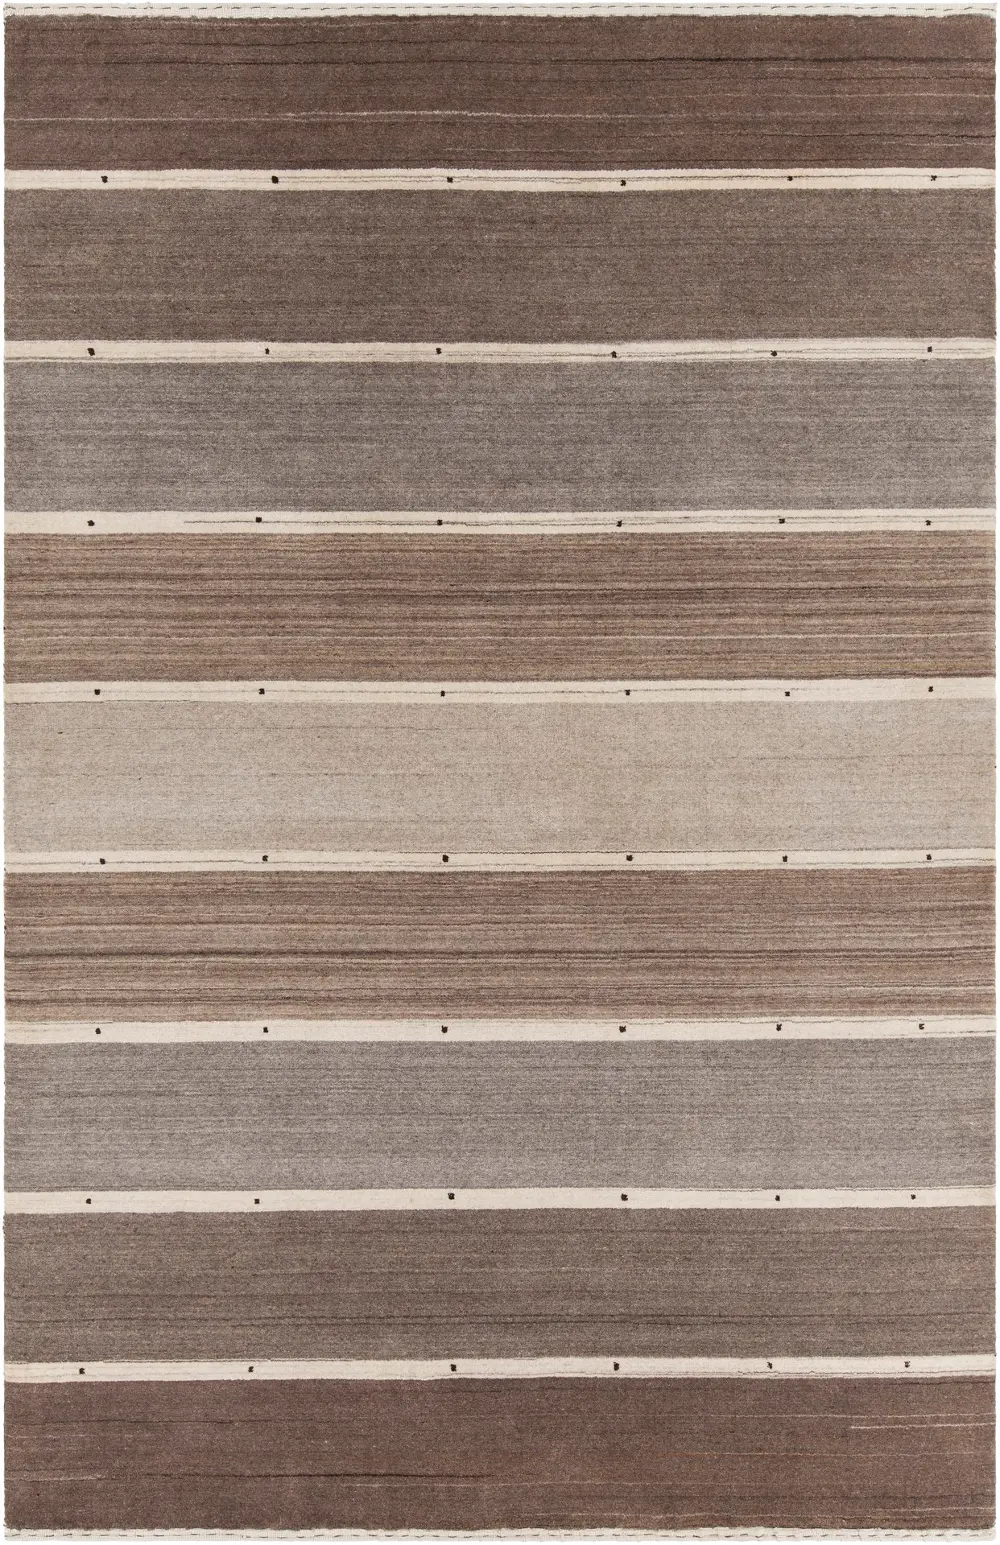 5 x 8 Medium Narrow Striped Brown and Beige Area Rug - Elantra-1